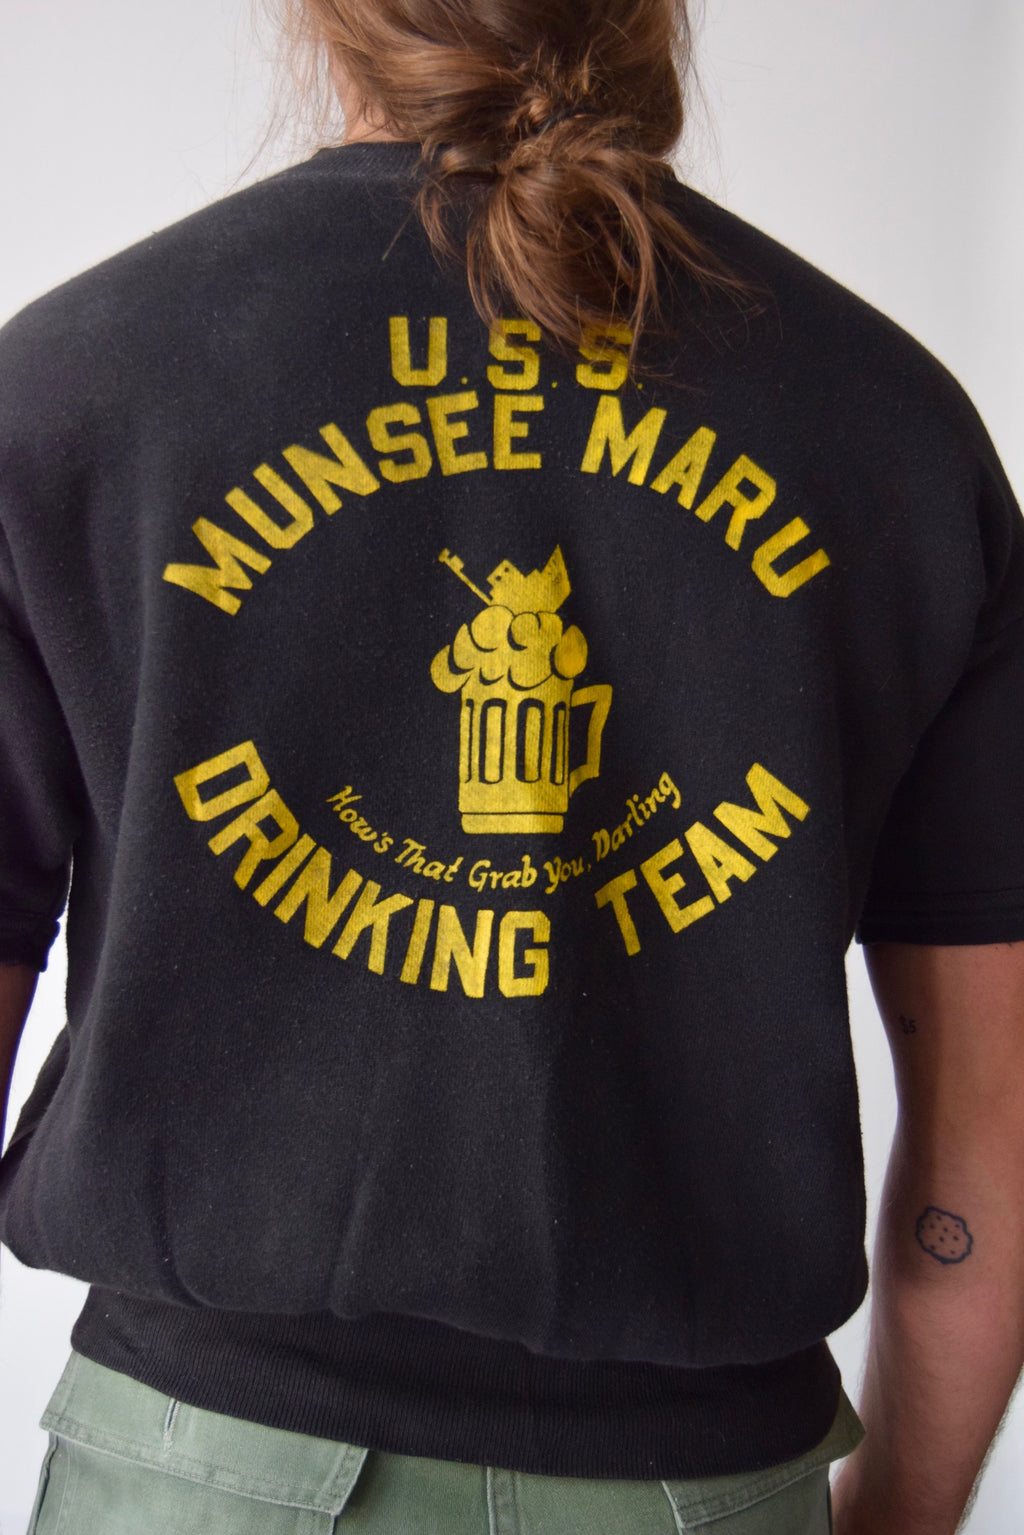 Vintage U.S.S. Munsee Maru Drinking Team Short Sleeve Sweatshirt